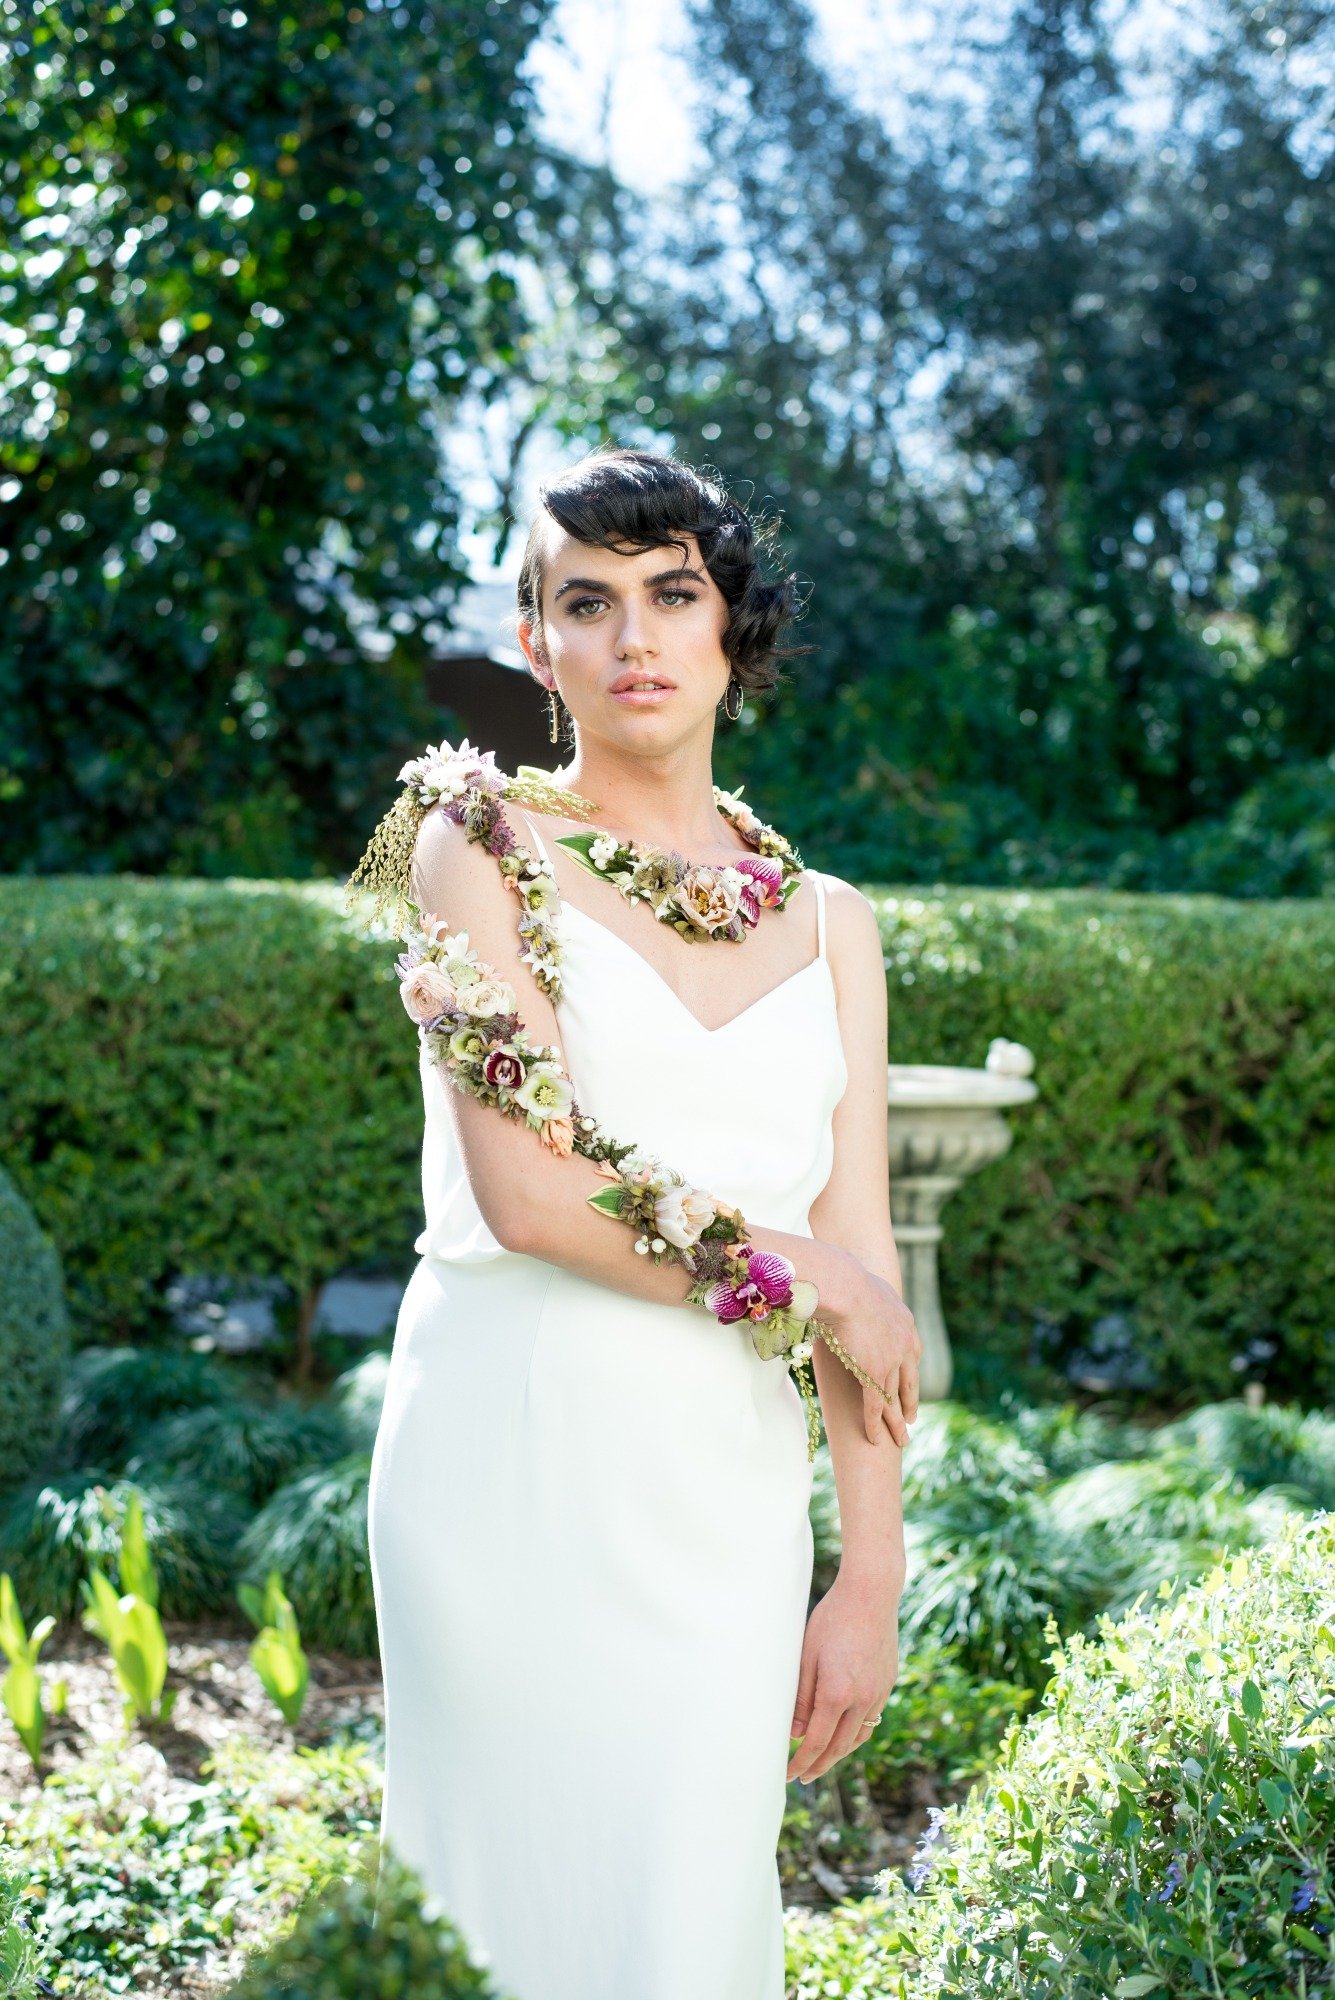 Greek goddess inspired bridal fashion